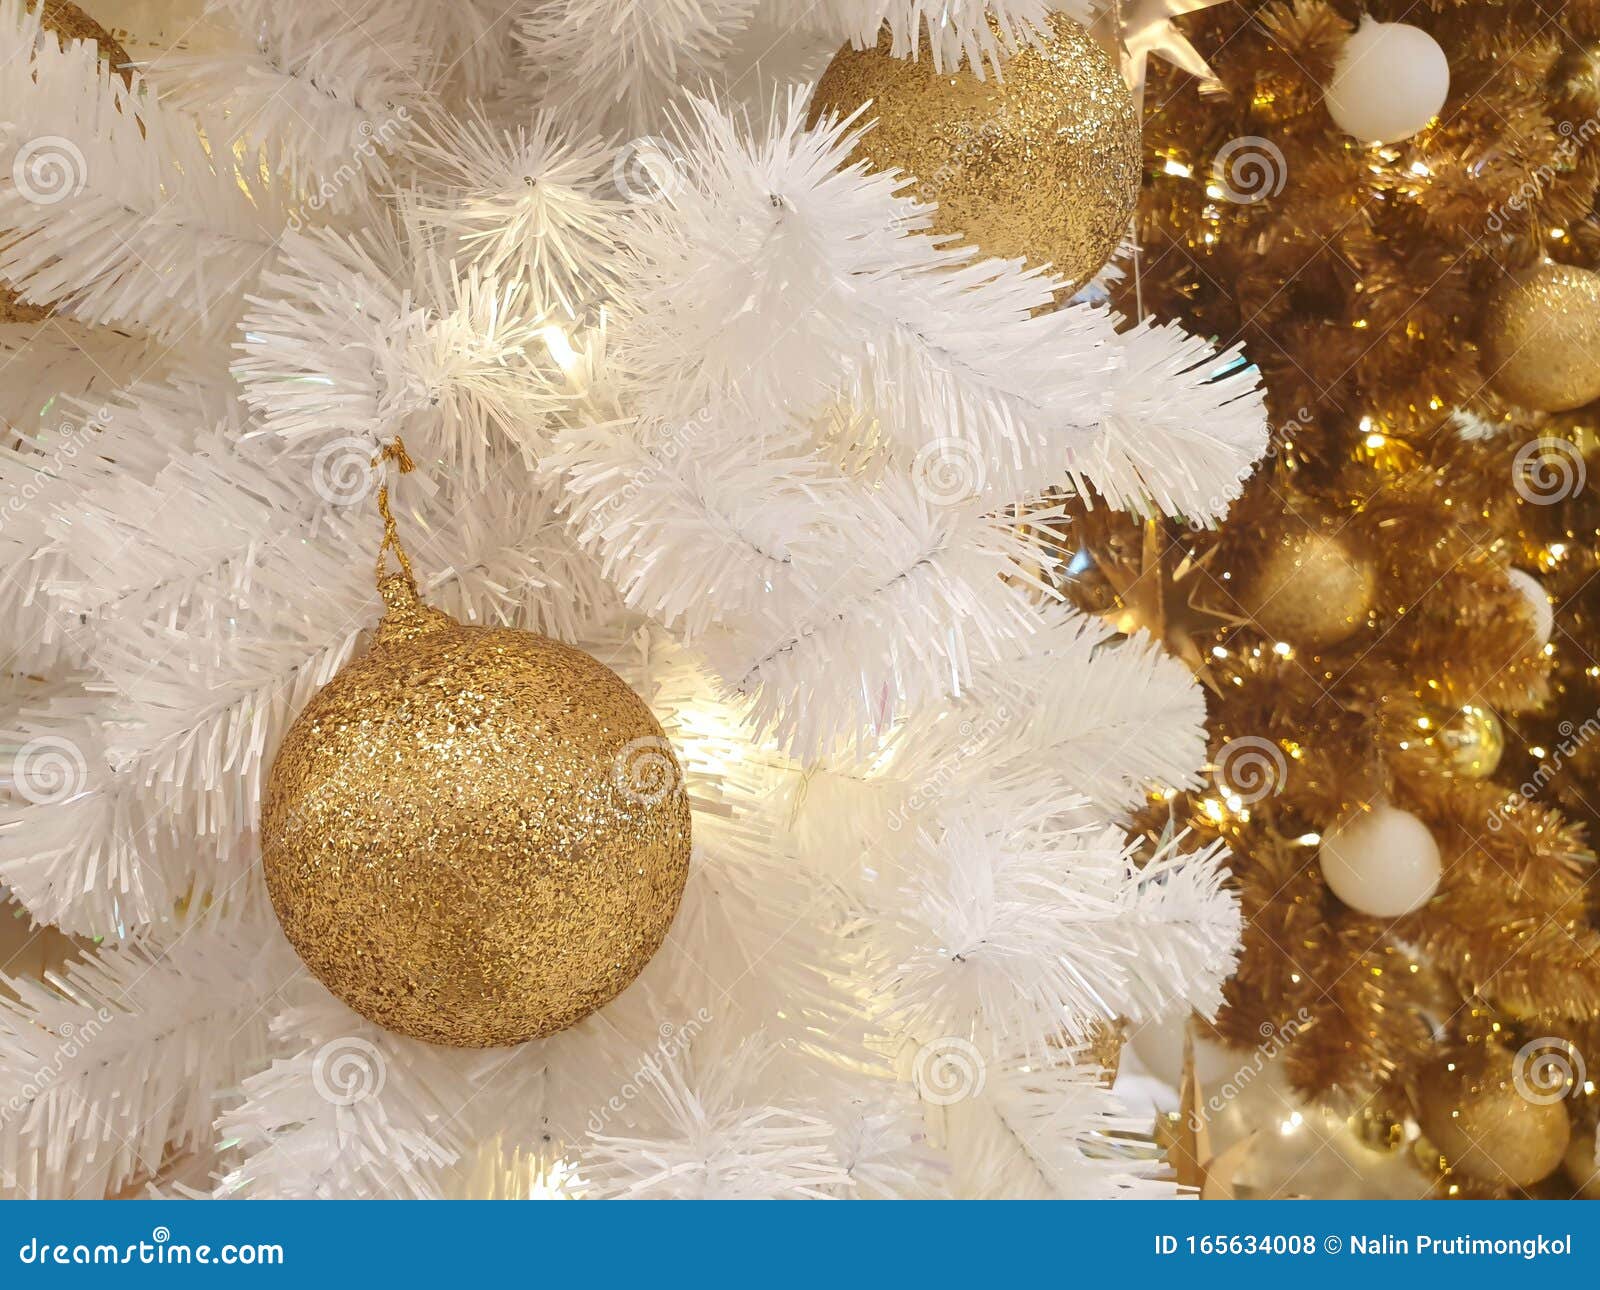 Garland Background and Xmas  Christmas Tree Decoration  Stock Photo - Image of beautiful, ornaments: 165634008